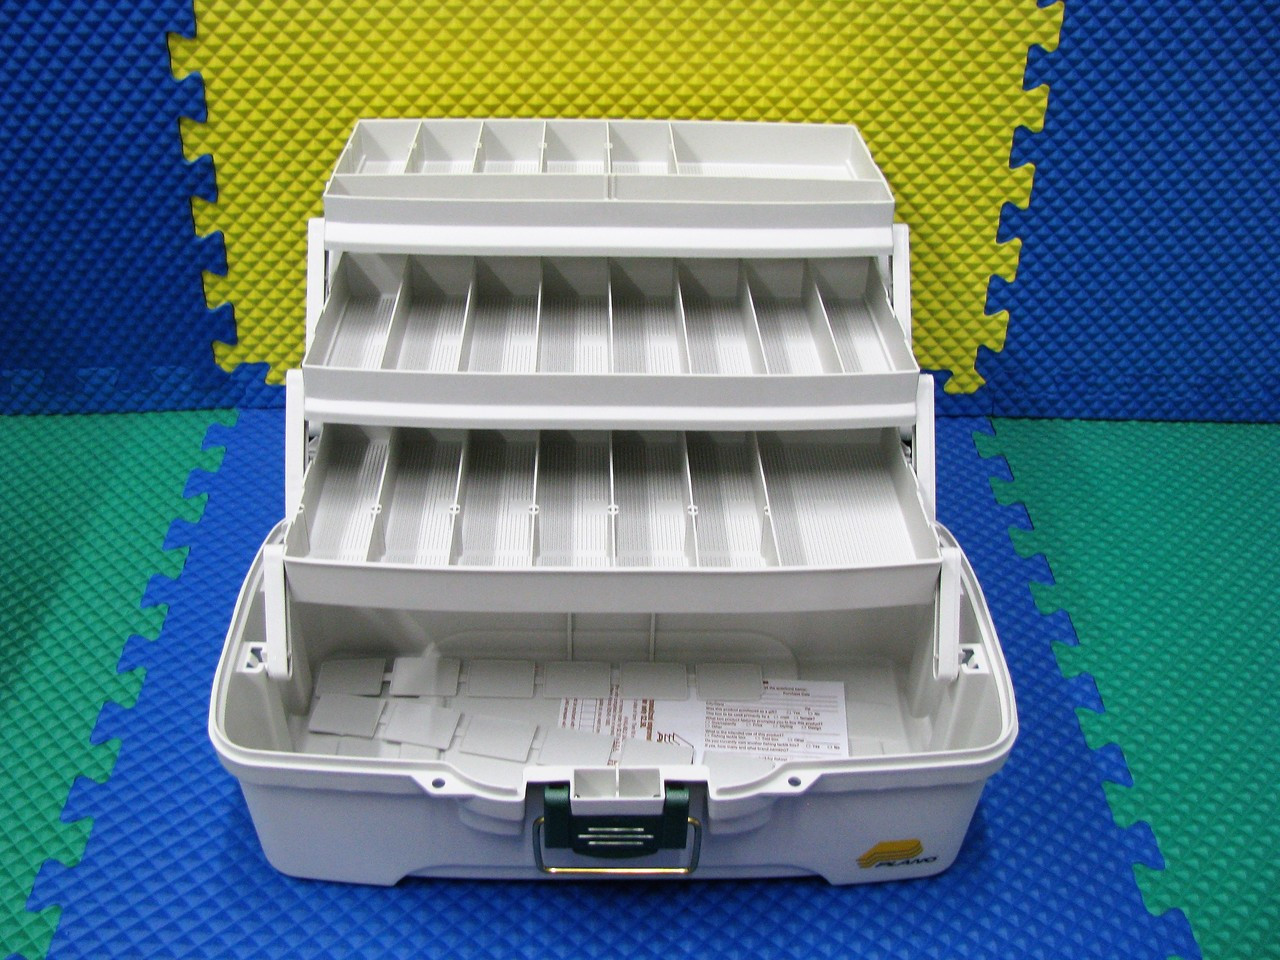 Plano Tackle Box,tackle,6201-06 Red-One Tray Box (993968),6202-06 Blue  Metallic-Two Tray Box (993969),6203-06 Green-Three Tray Box (993970)